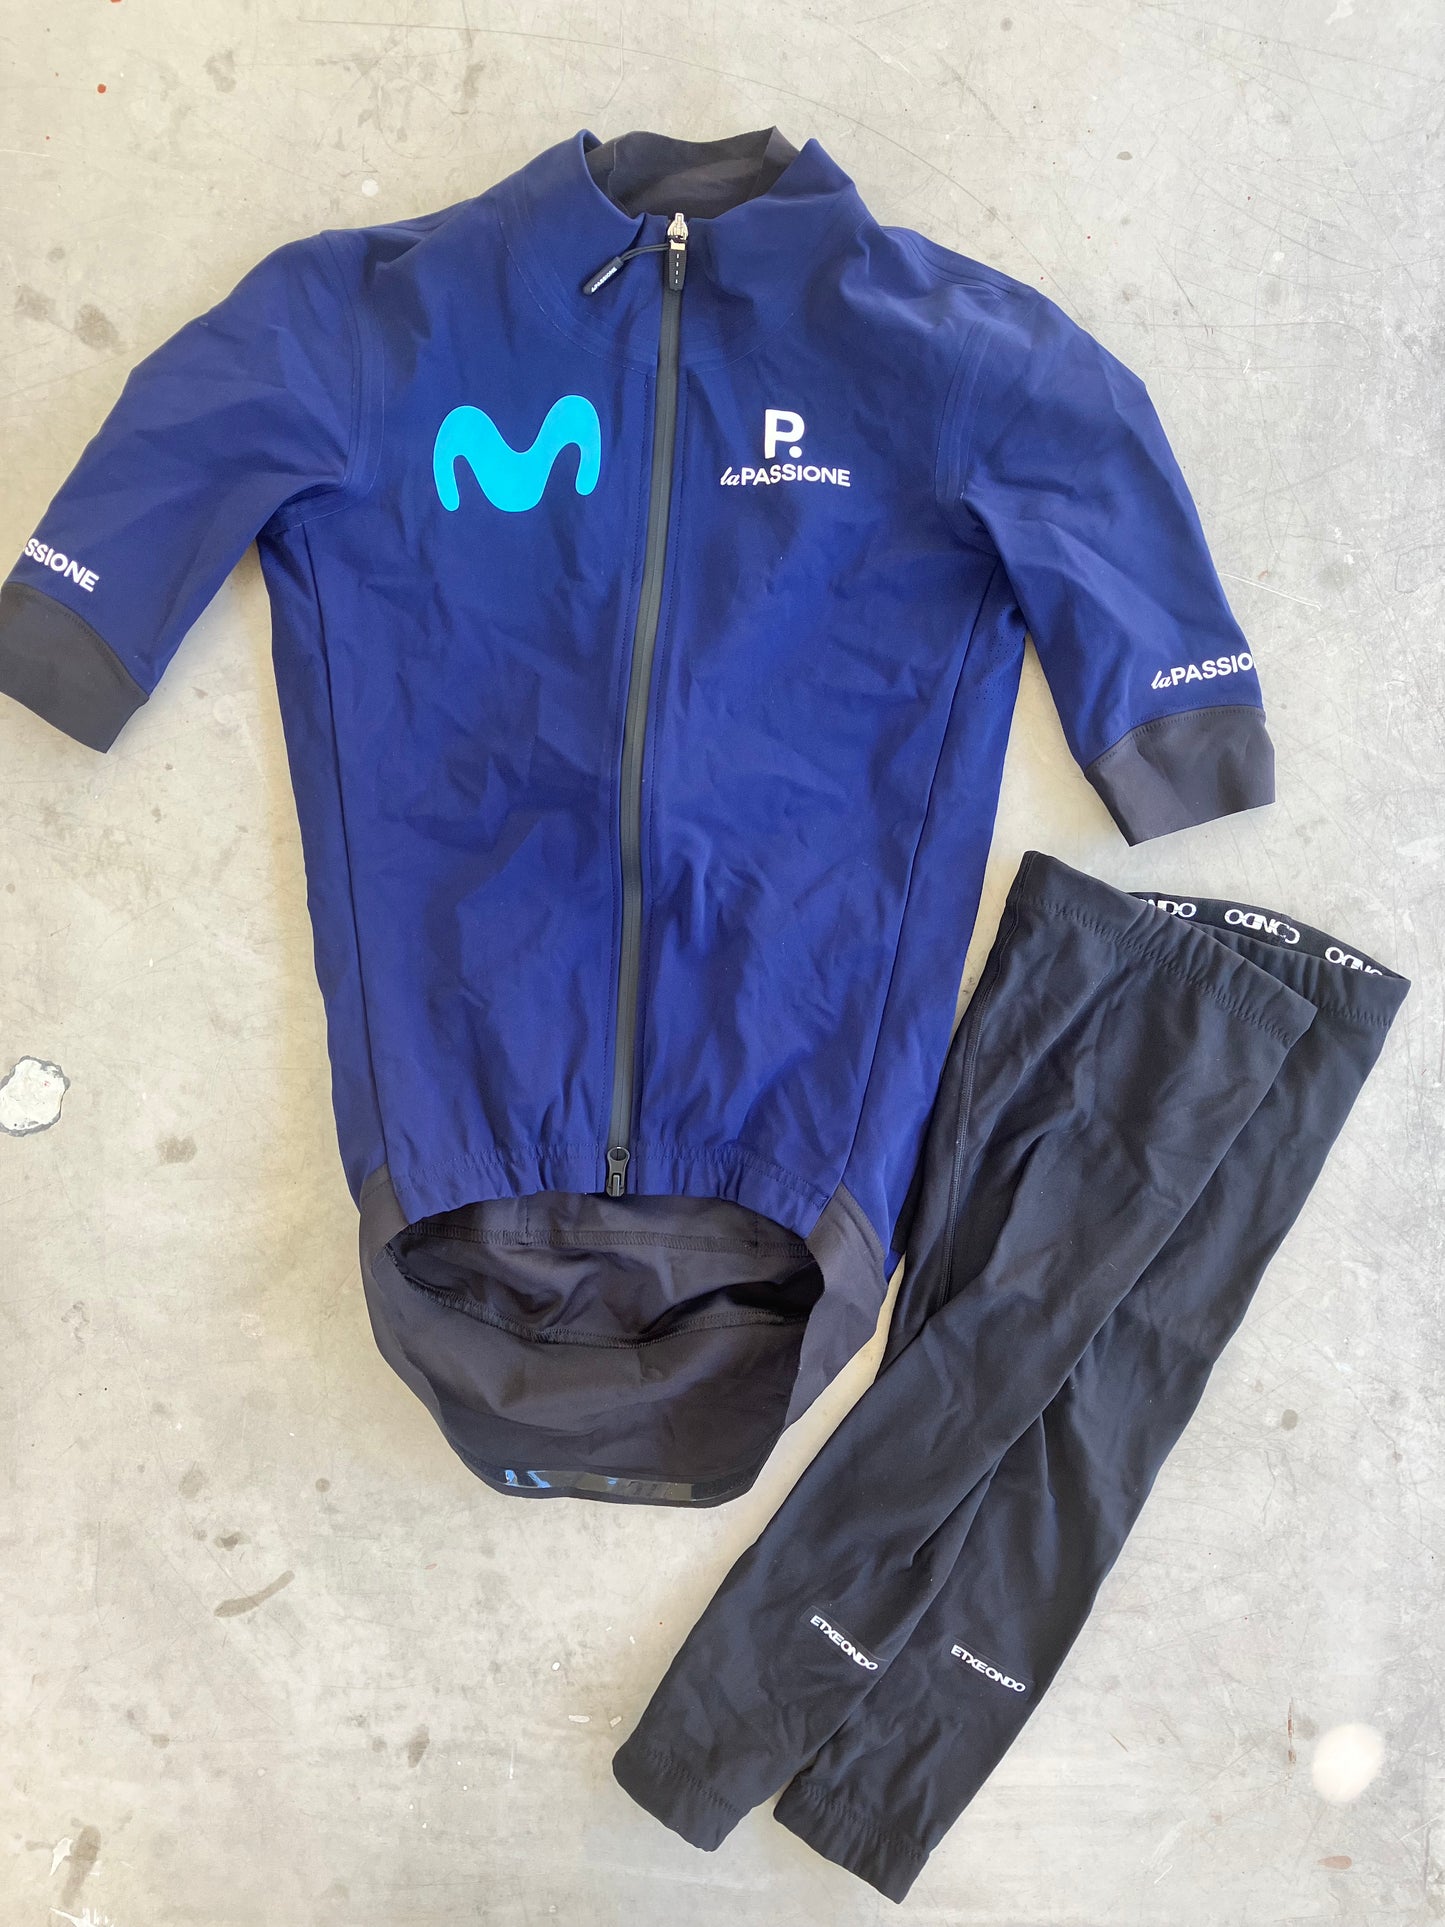 Movistar | La Passione - Short Sleeve Gabba Jacket, with Free Leg Warmers | XS | Rider-Issued Pro Team Kit